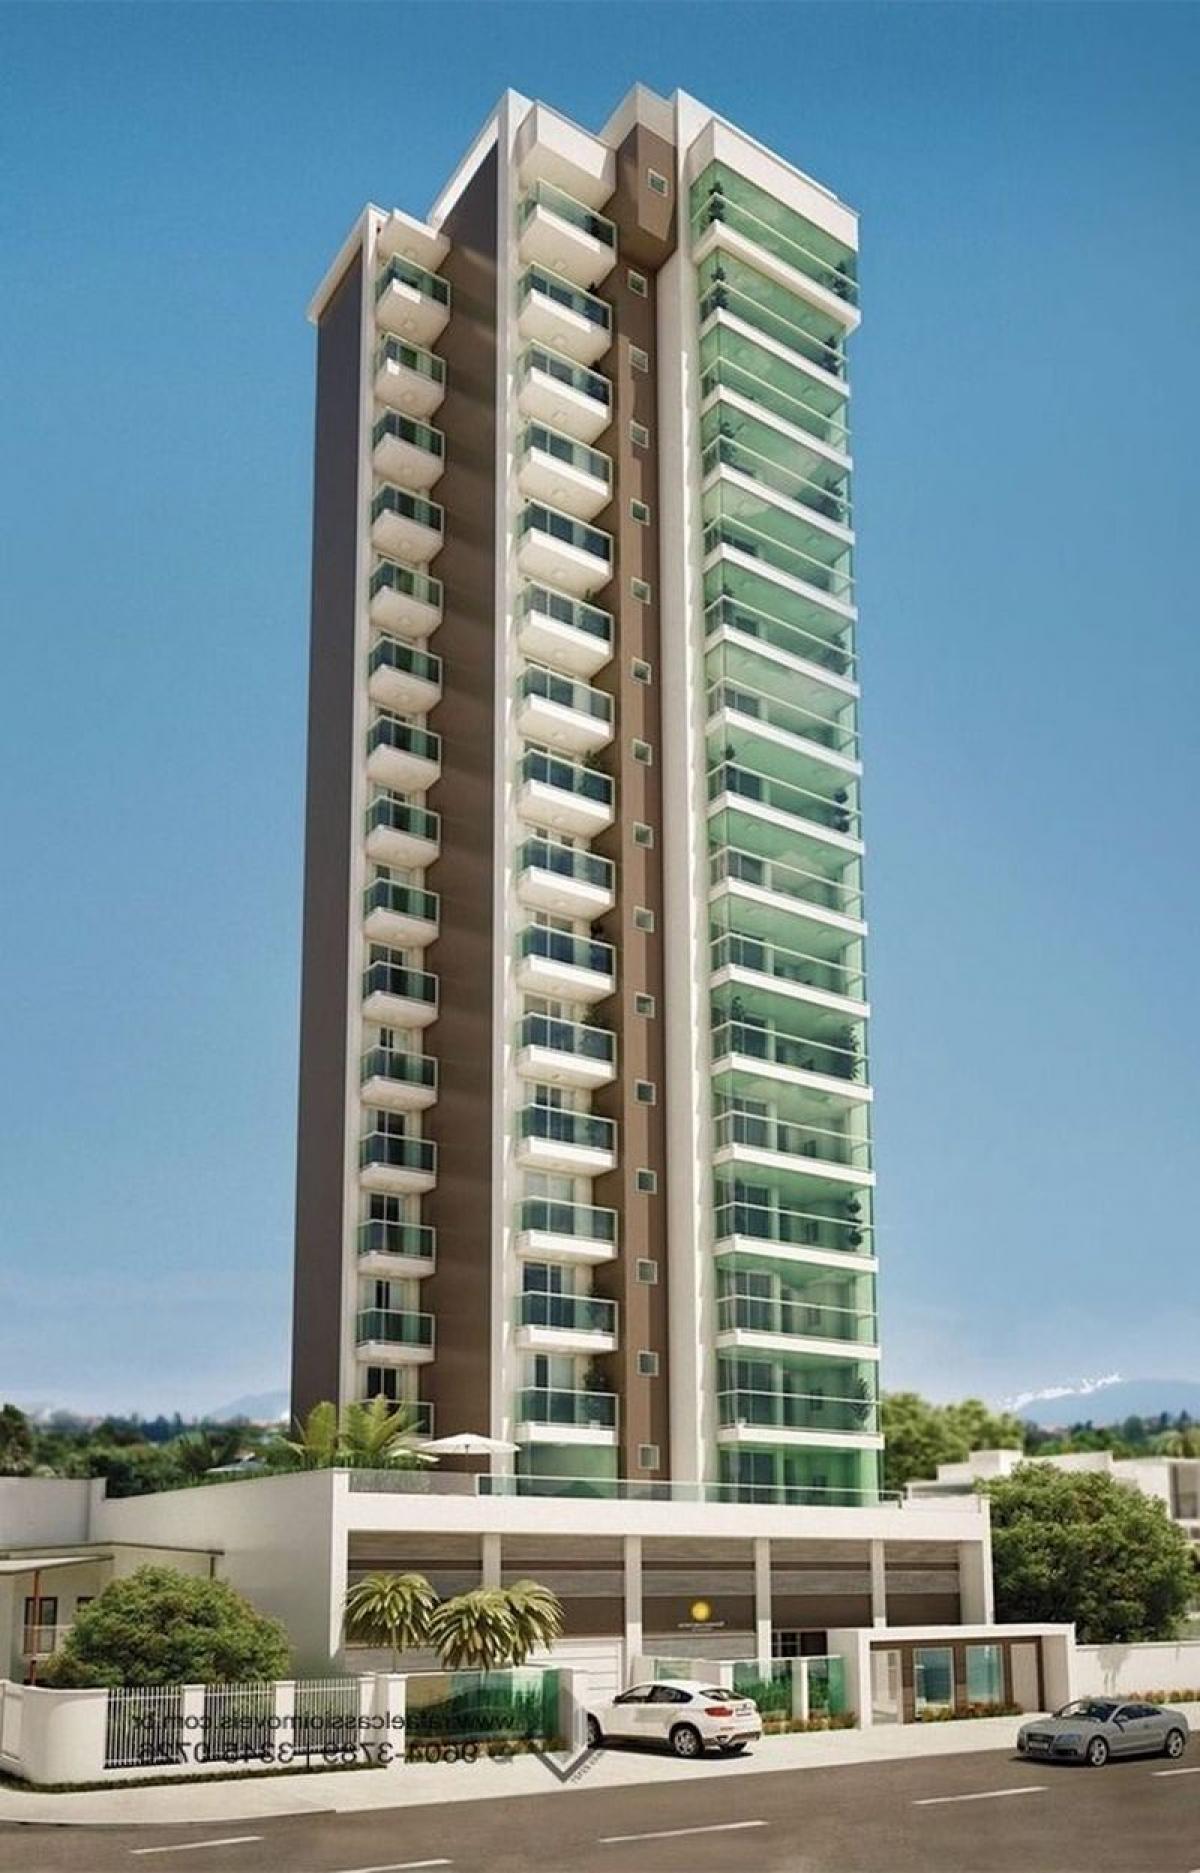 Picture of Apartment For Sale in Balneario Piçarras, Santa Catarina, Brazil